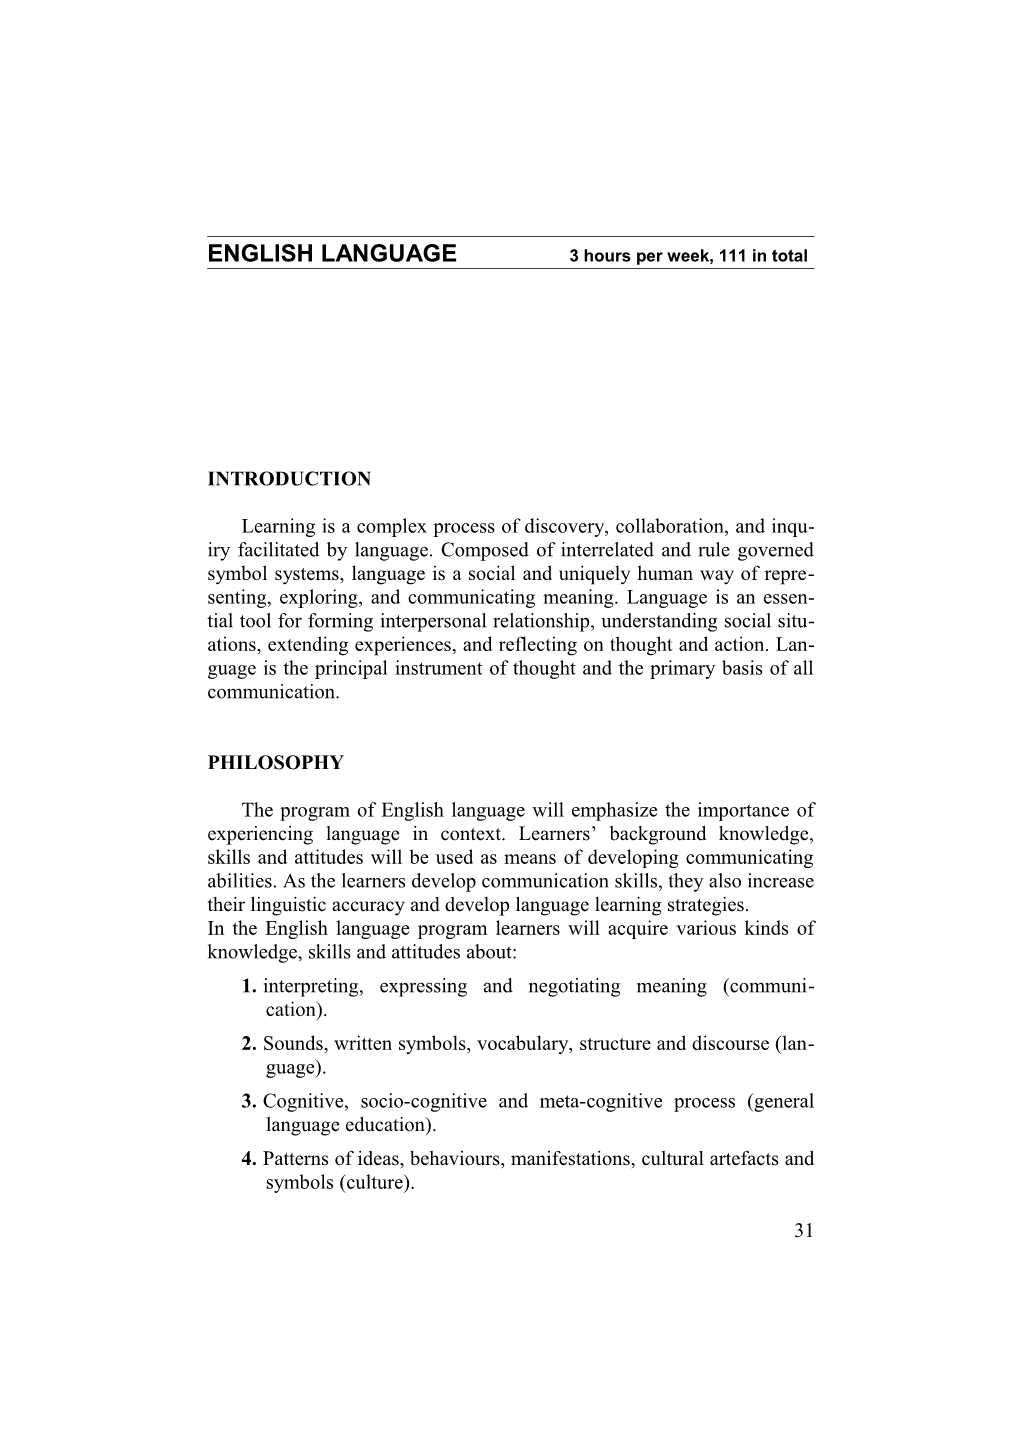 English Language Curriculum